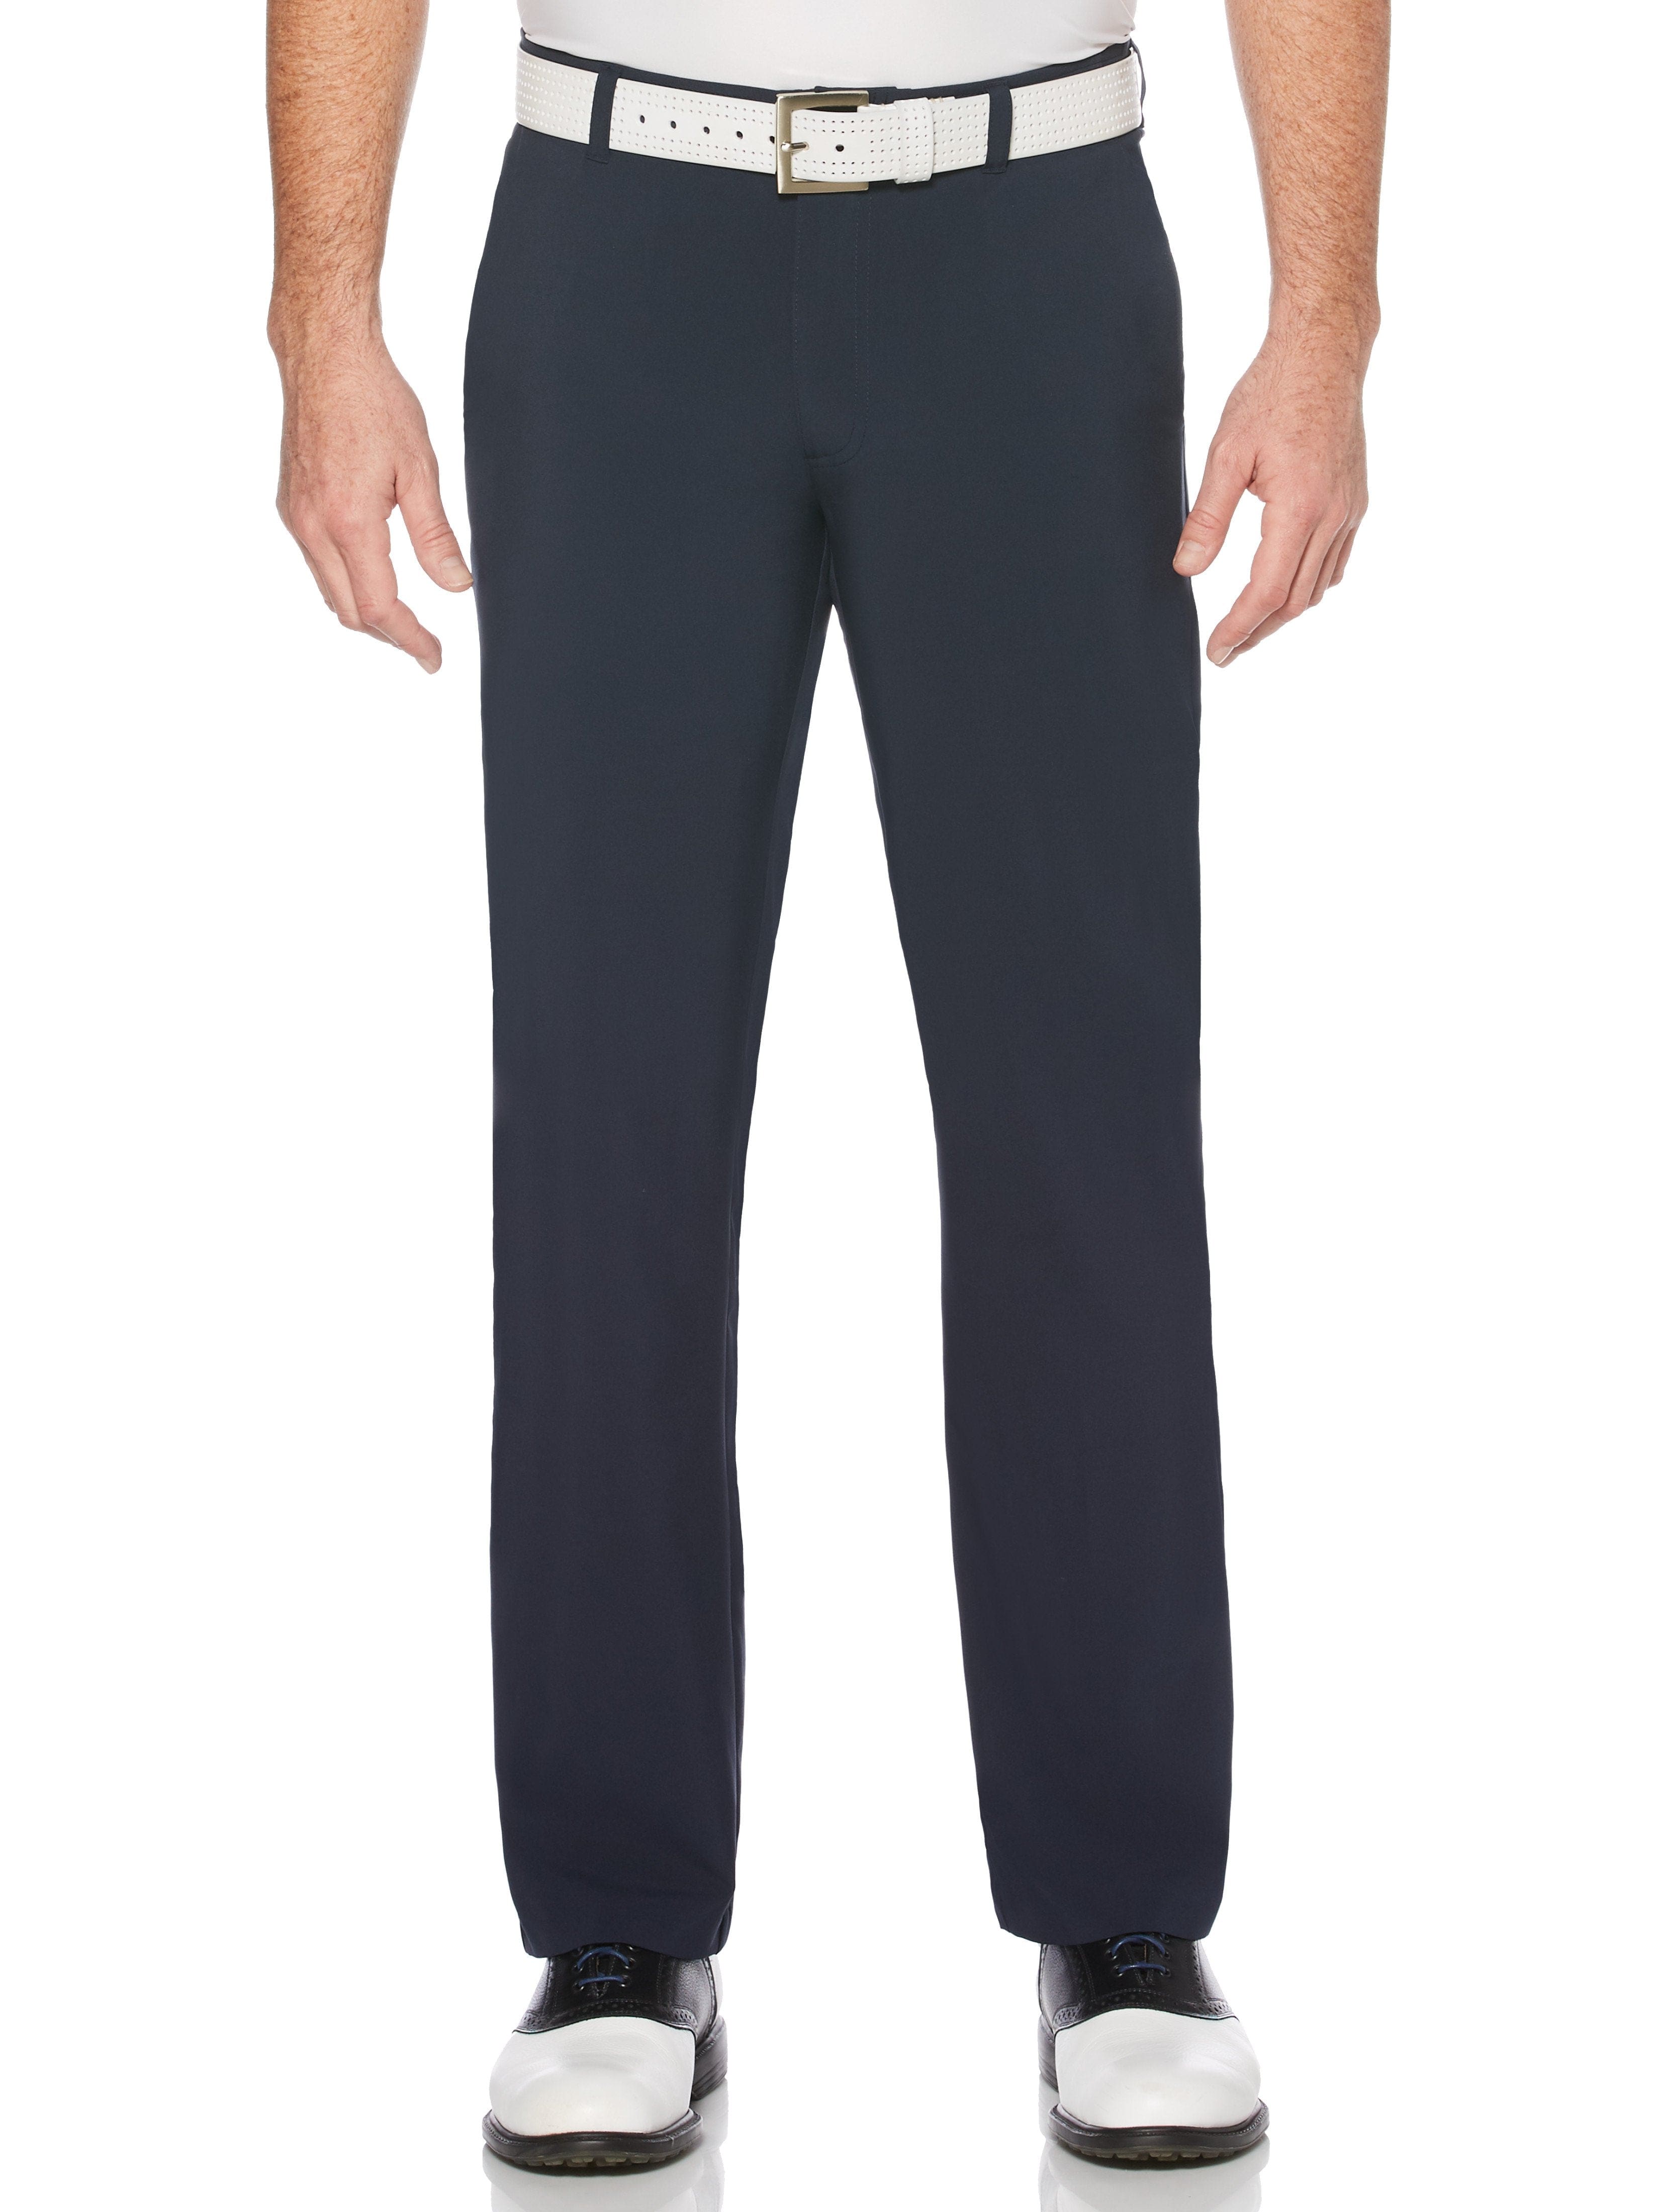 Jack Nicklaus Mens Flat Front Active Flex Pants, Size 30 x 30, Classic Navy Blue, Polyester/Elastane | Golf Apparel Shop